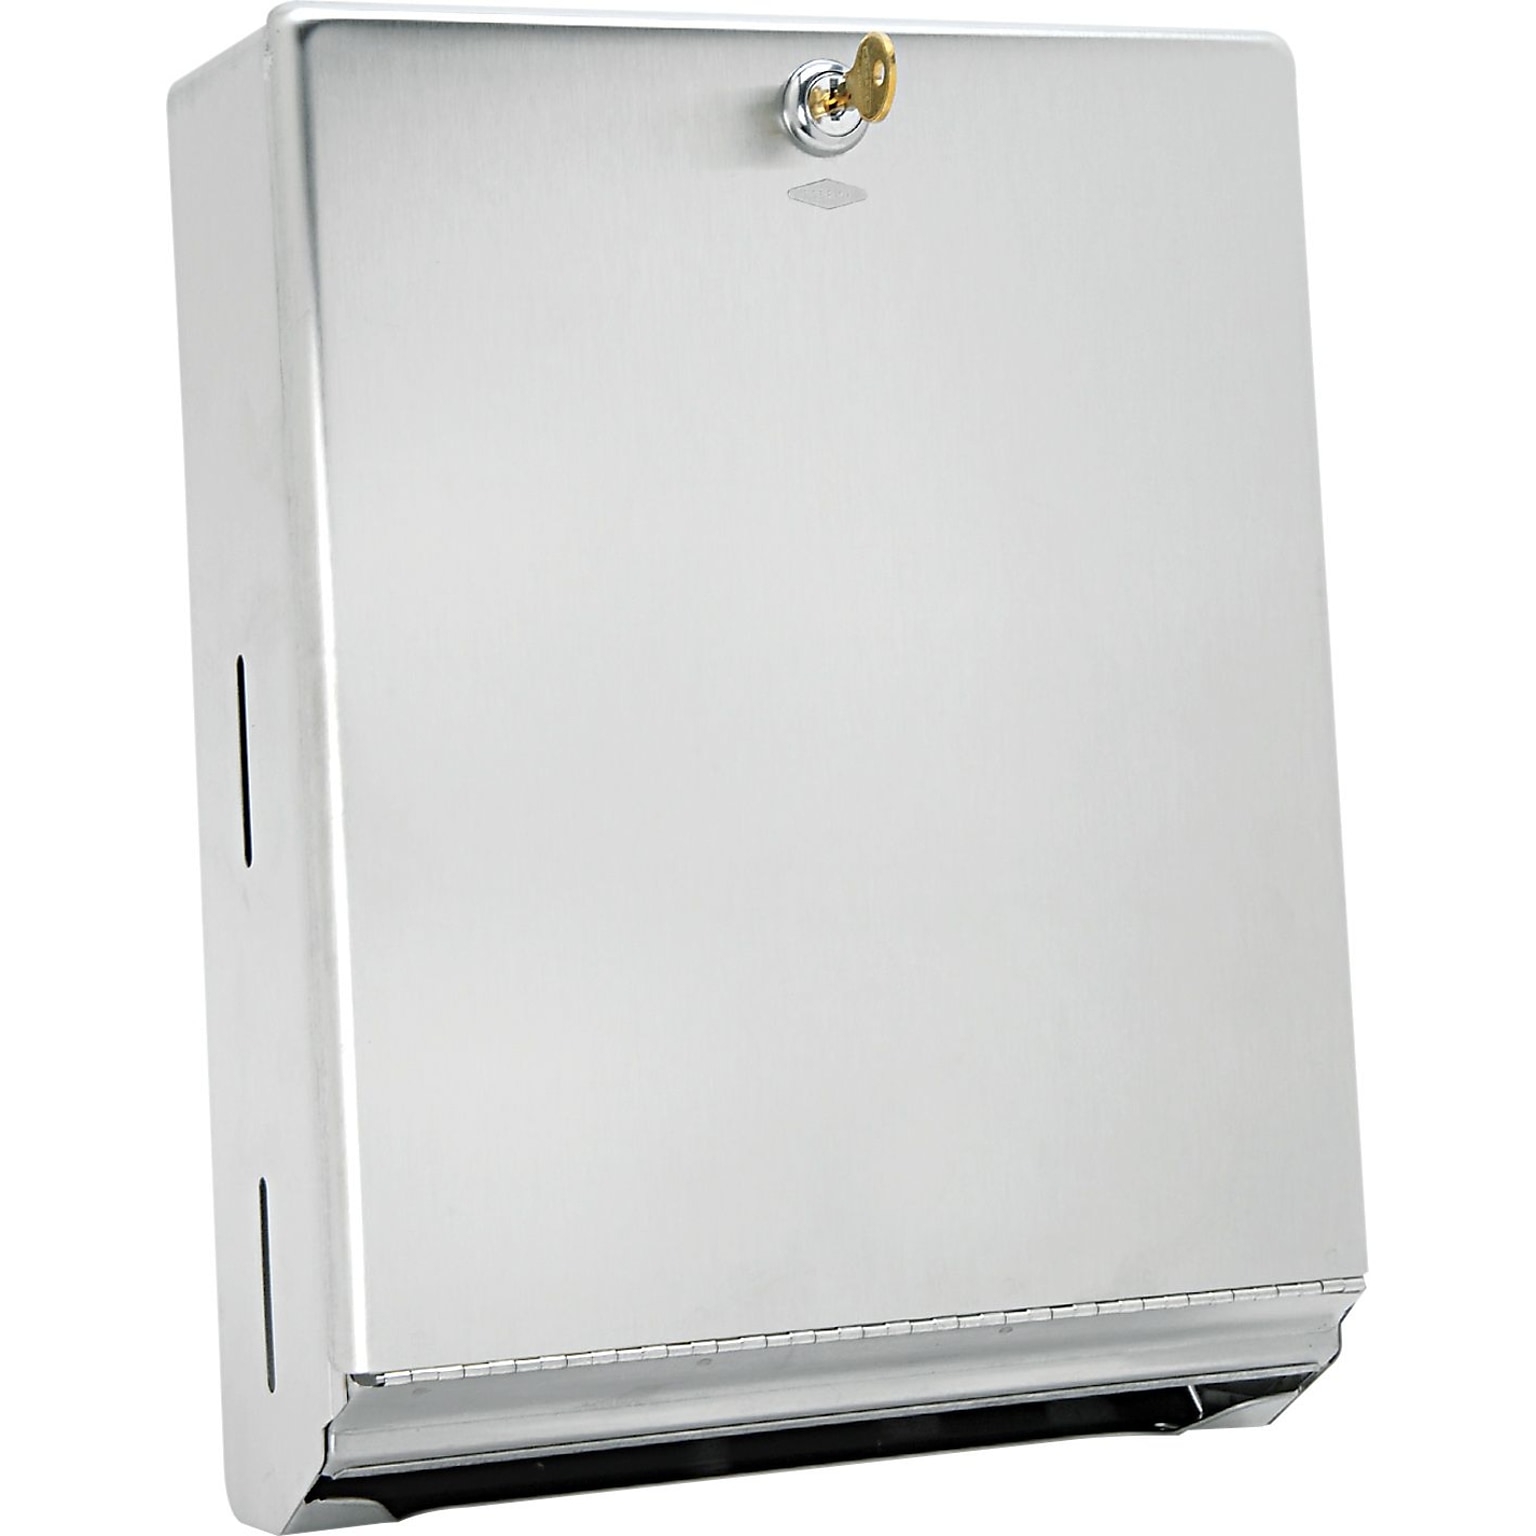 Bobrick C-Fold/Multifold Paper Towel Dispenser, Stainless Steel, 14H x 10.75W x 4D (BOB262)